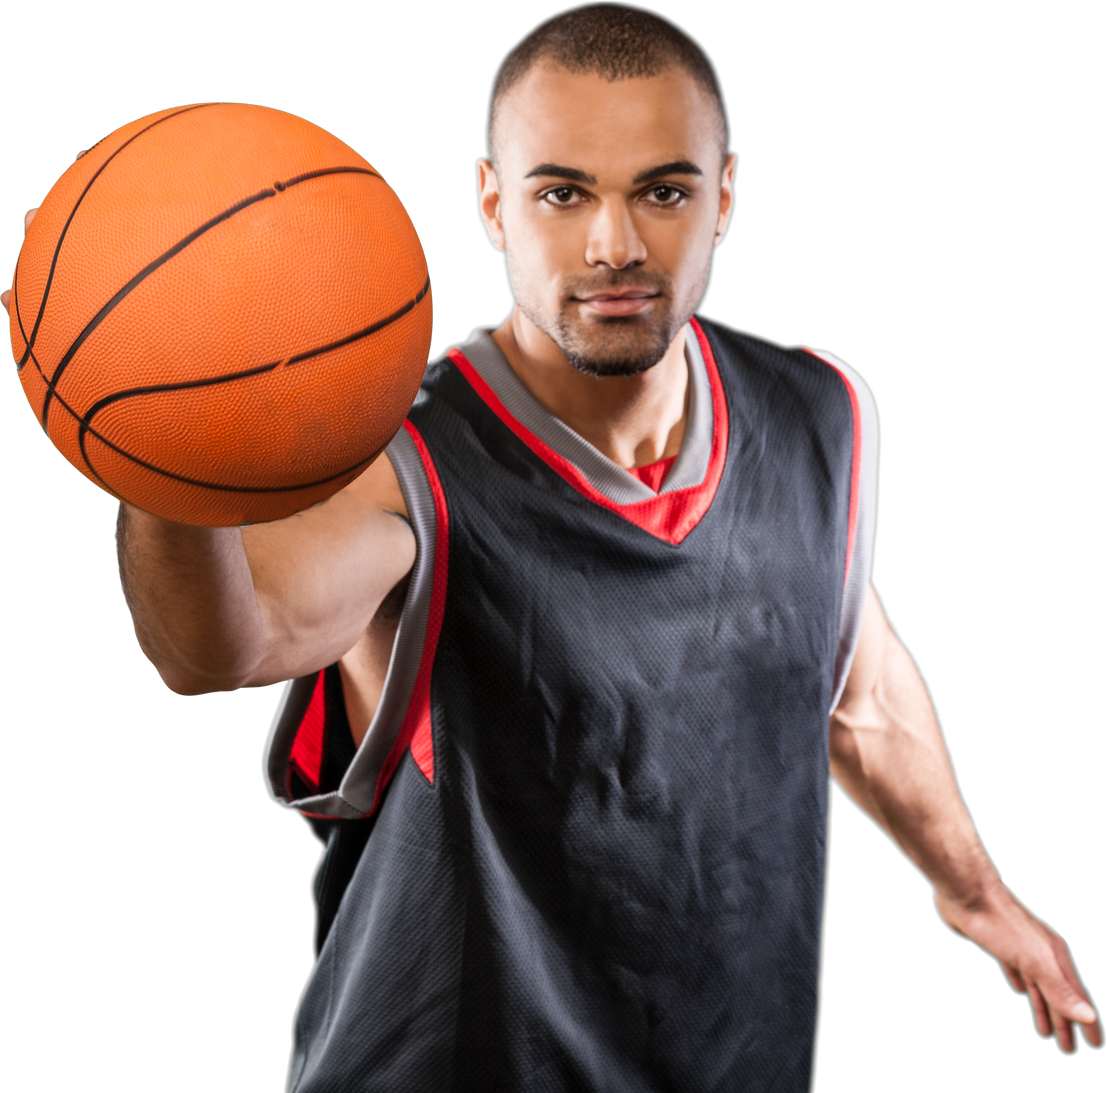 Basketball Player Giving a Ball - Isolated